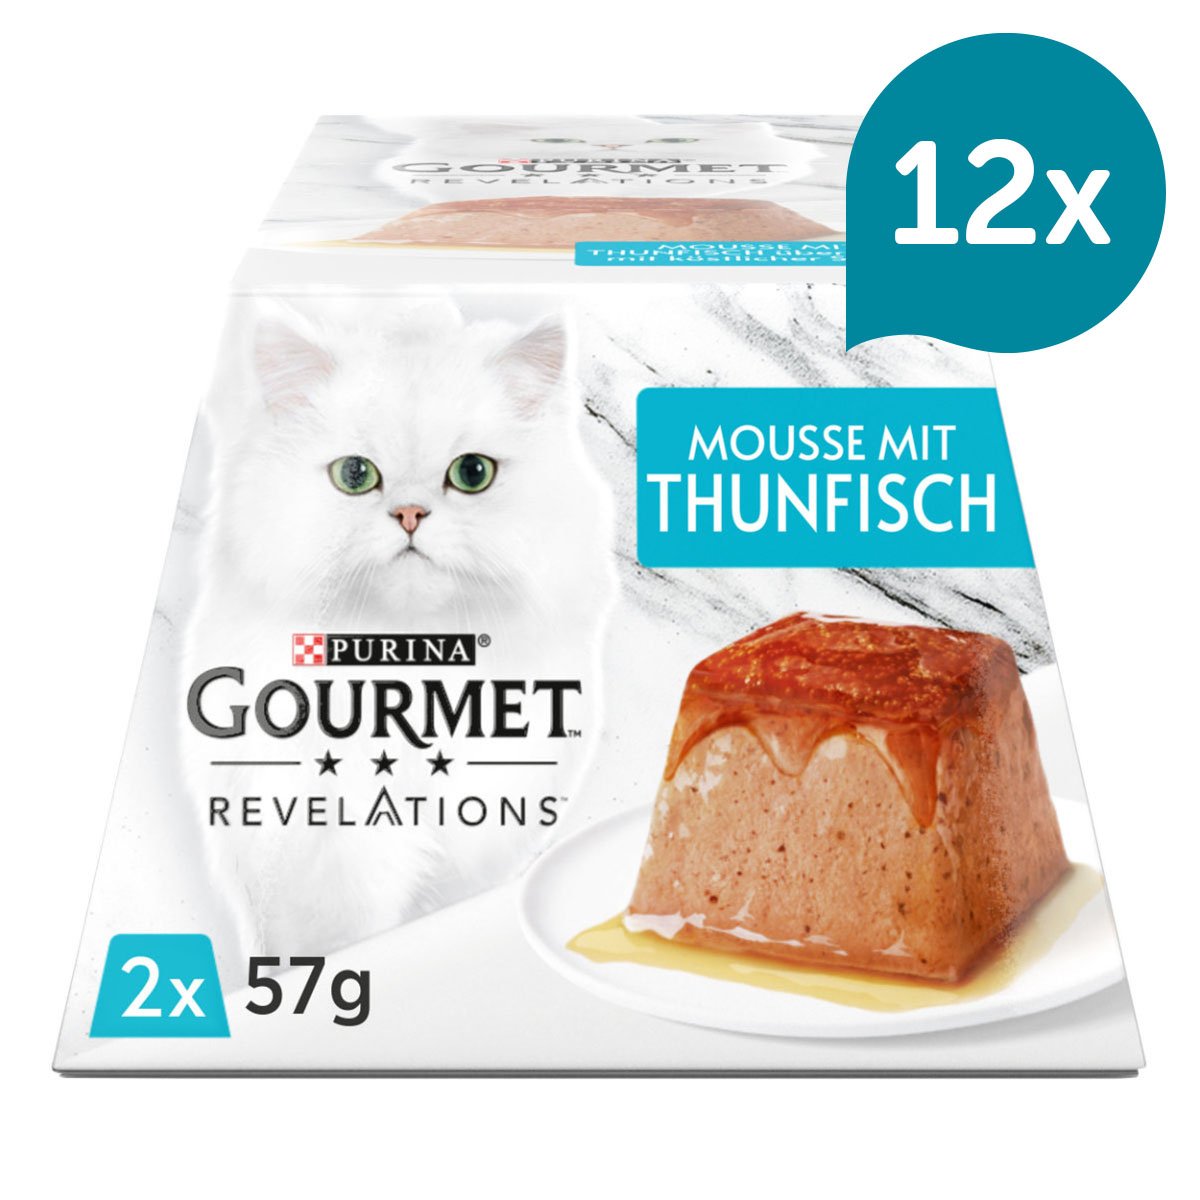 GOURMET Revelations Mousse in Sauce mit Thunfisch 12x2x57g